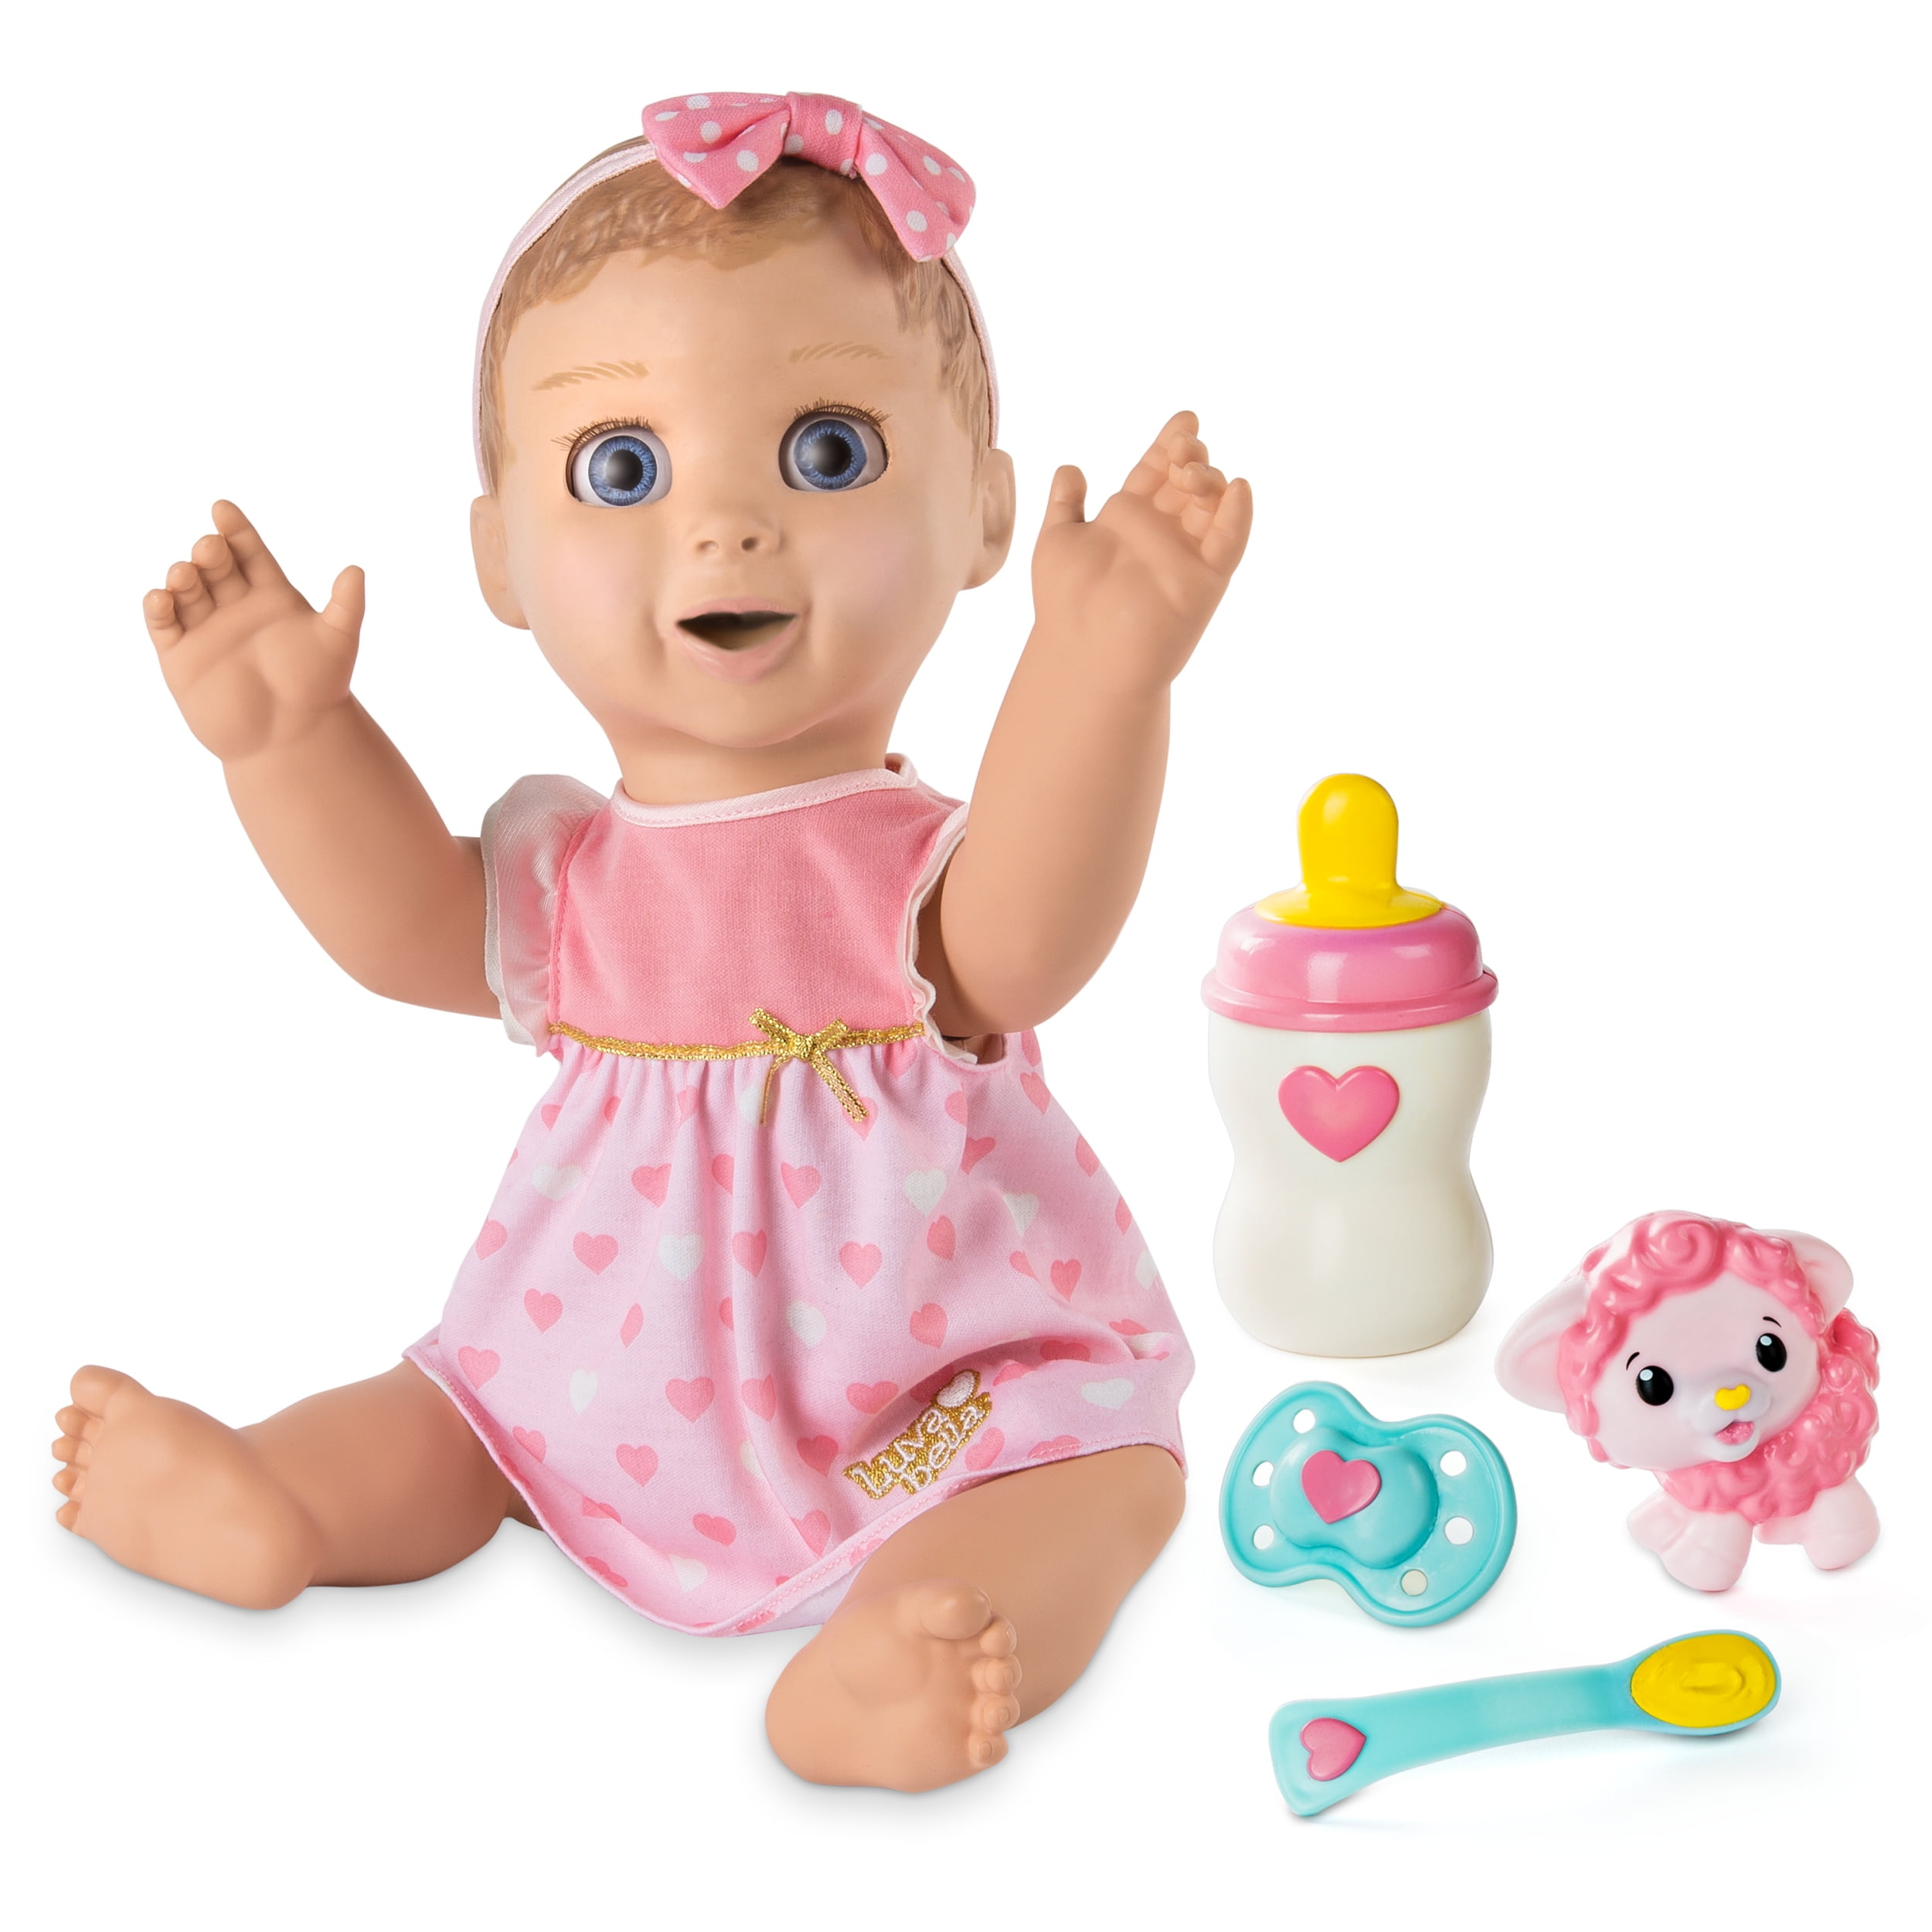 Luvabella Newborn Interactive Baby Doll Blonde Hair Real Store Return 